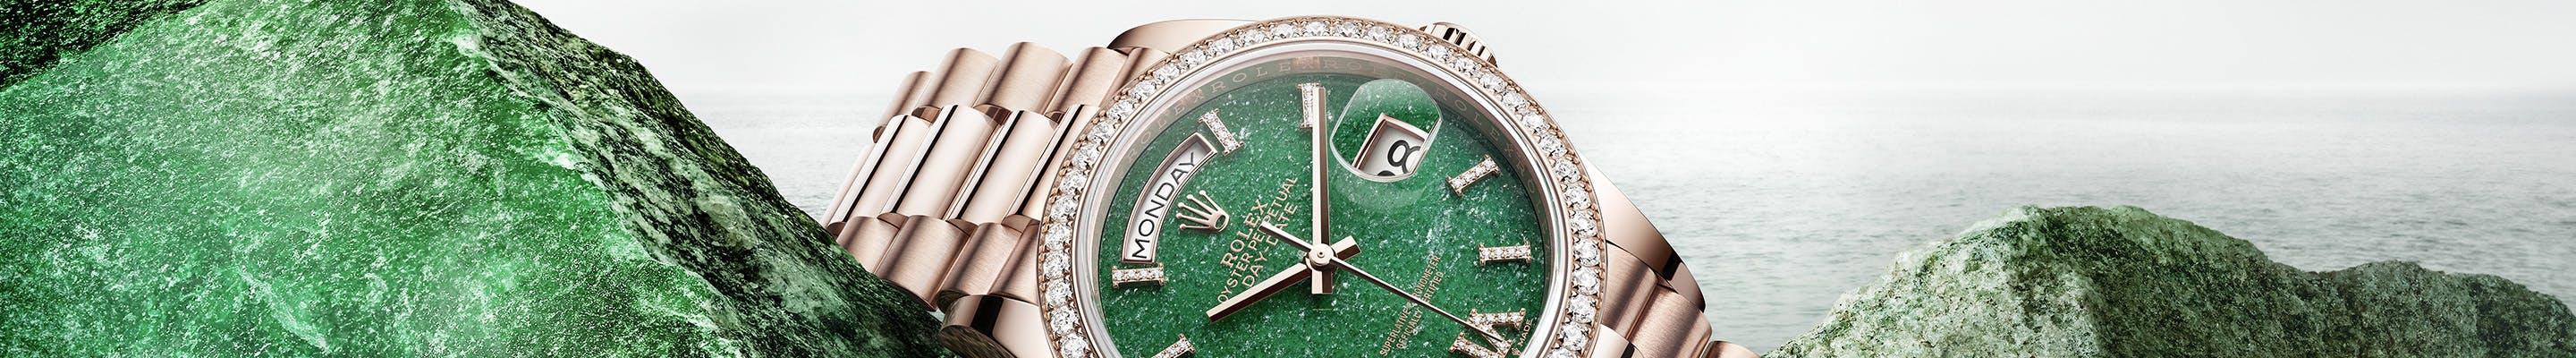 Rolex Day-Date watch